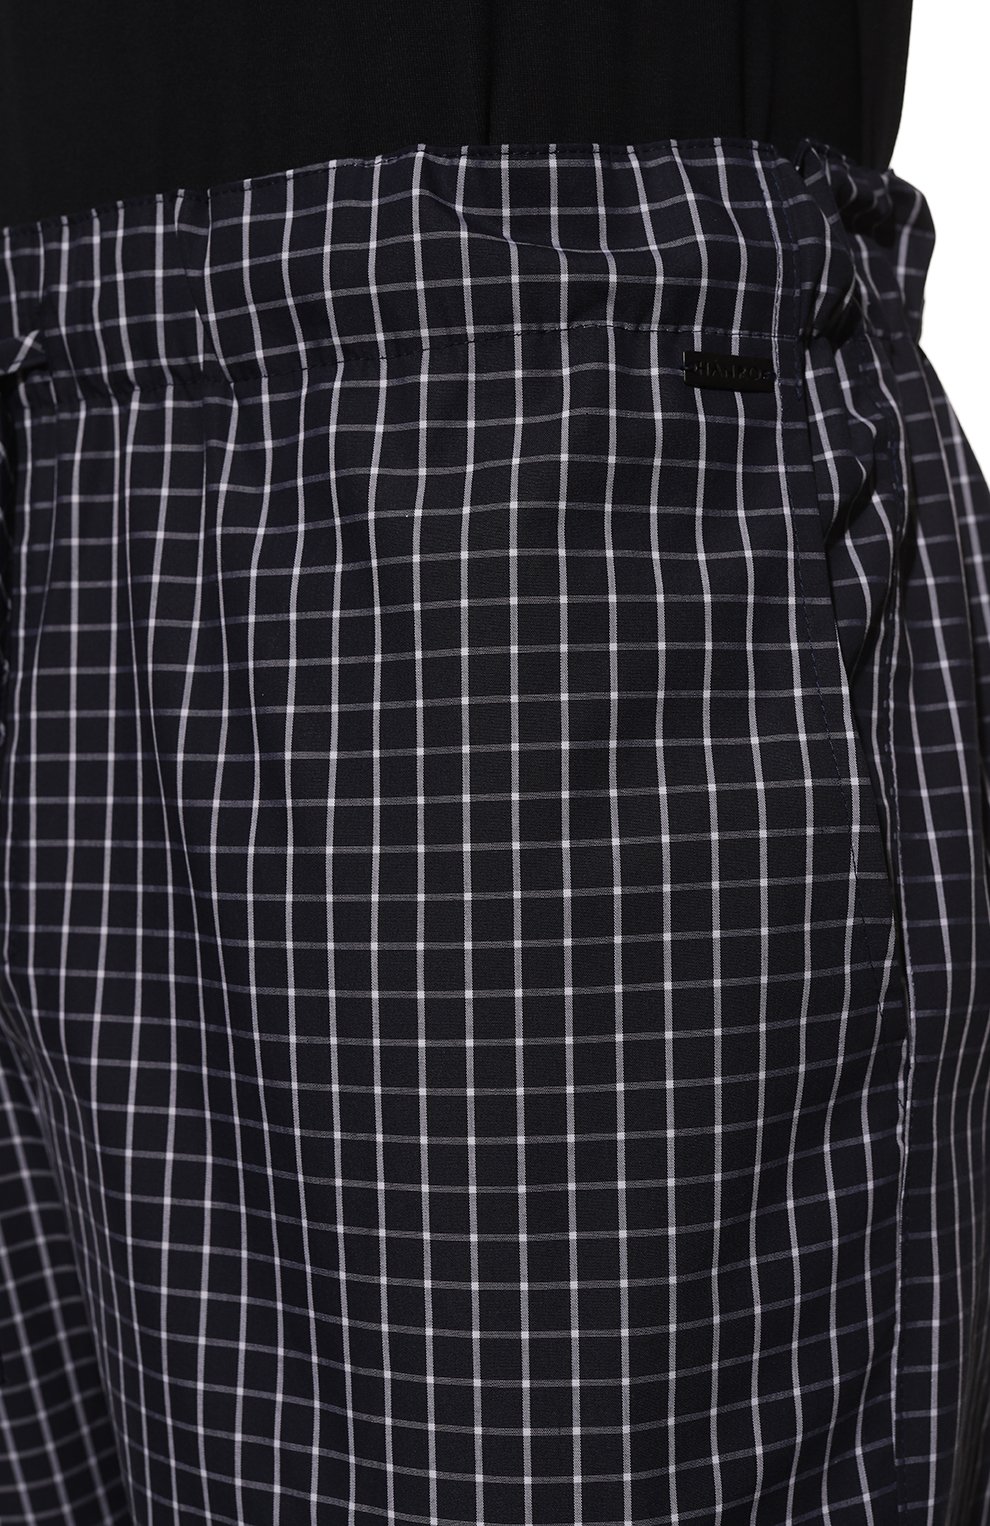 Мужс кие хлопковые домашние брюки HANRO черно-белого цвета, арт. 075436. | Фото 5 (Длина (брюки, джинсы): Стандартные; Кросс-КТ: домашняя одежда; Материал внешний: Хлопок)